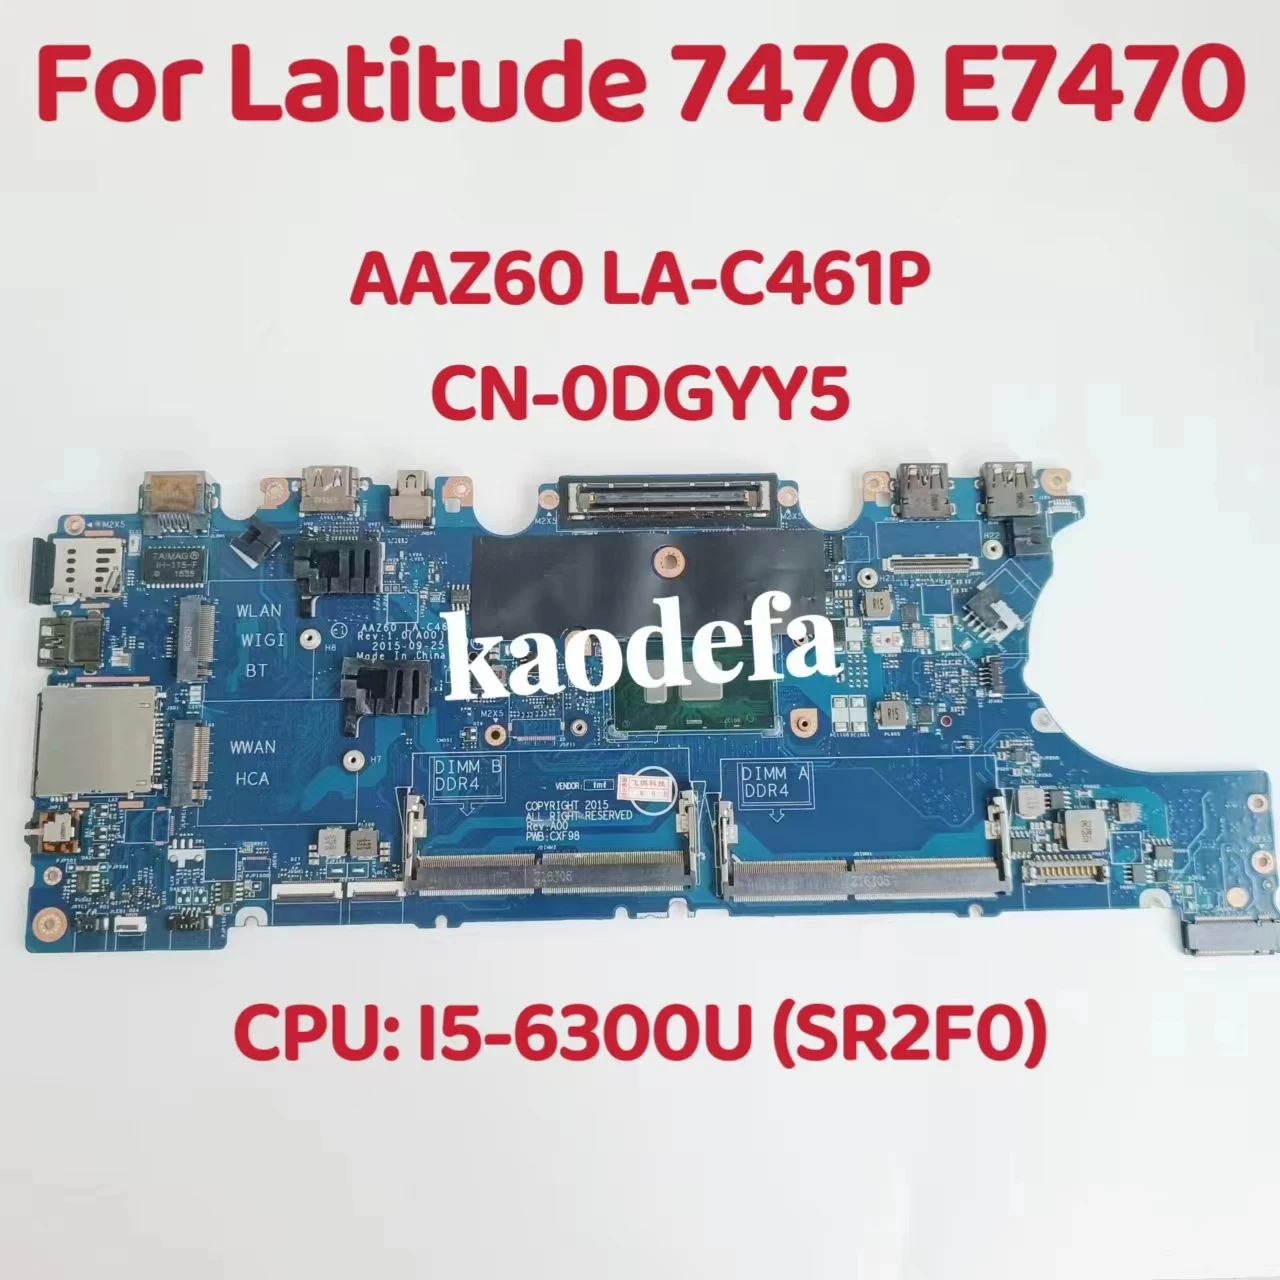 Материнская плата AAZ60 LA-C461P для Dell Latitude 7470 E7470 Материнская плата ноутбука Процессор: I5-6300U SR2F0 DDR4 CN-0DGYY5 0DGYY5 100% Тест В порядке